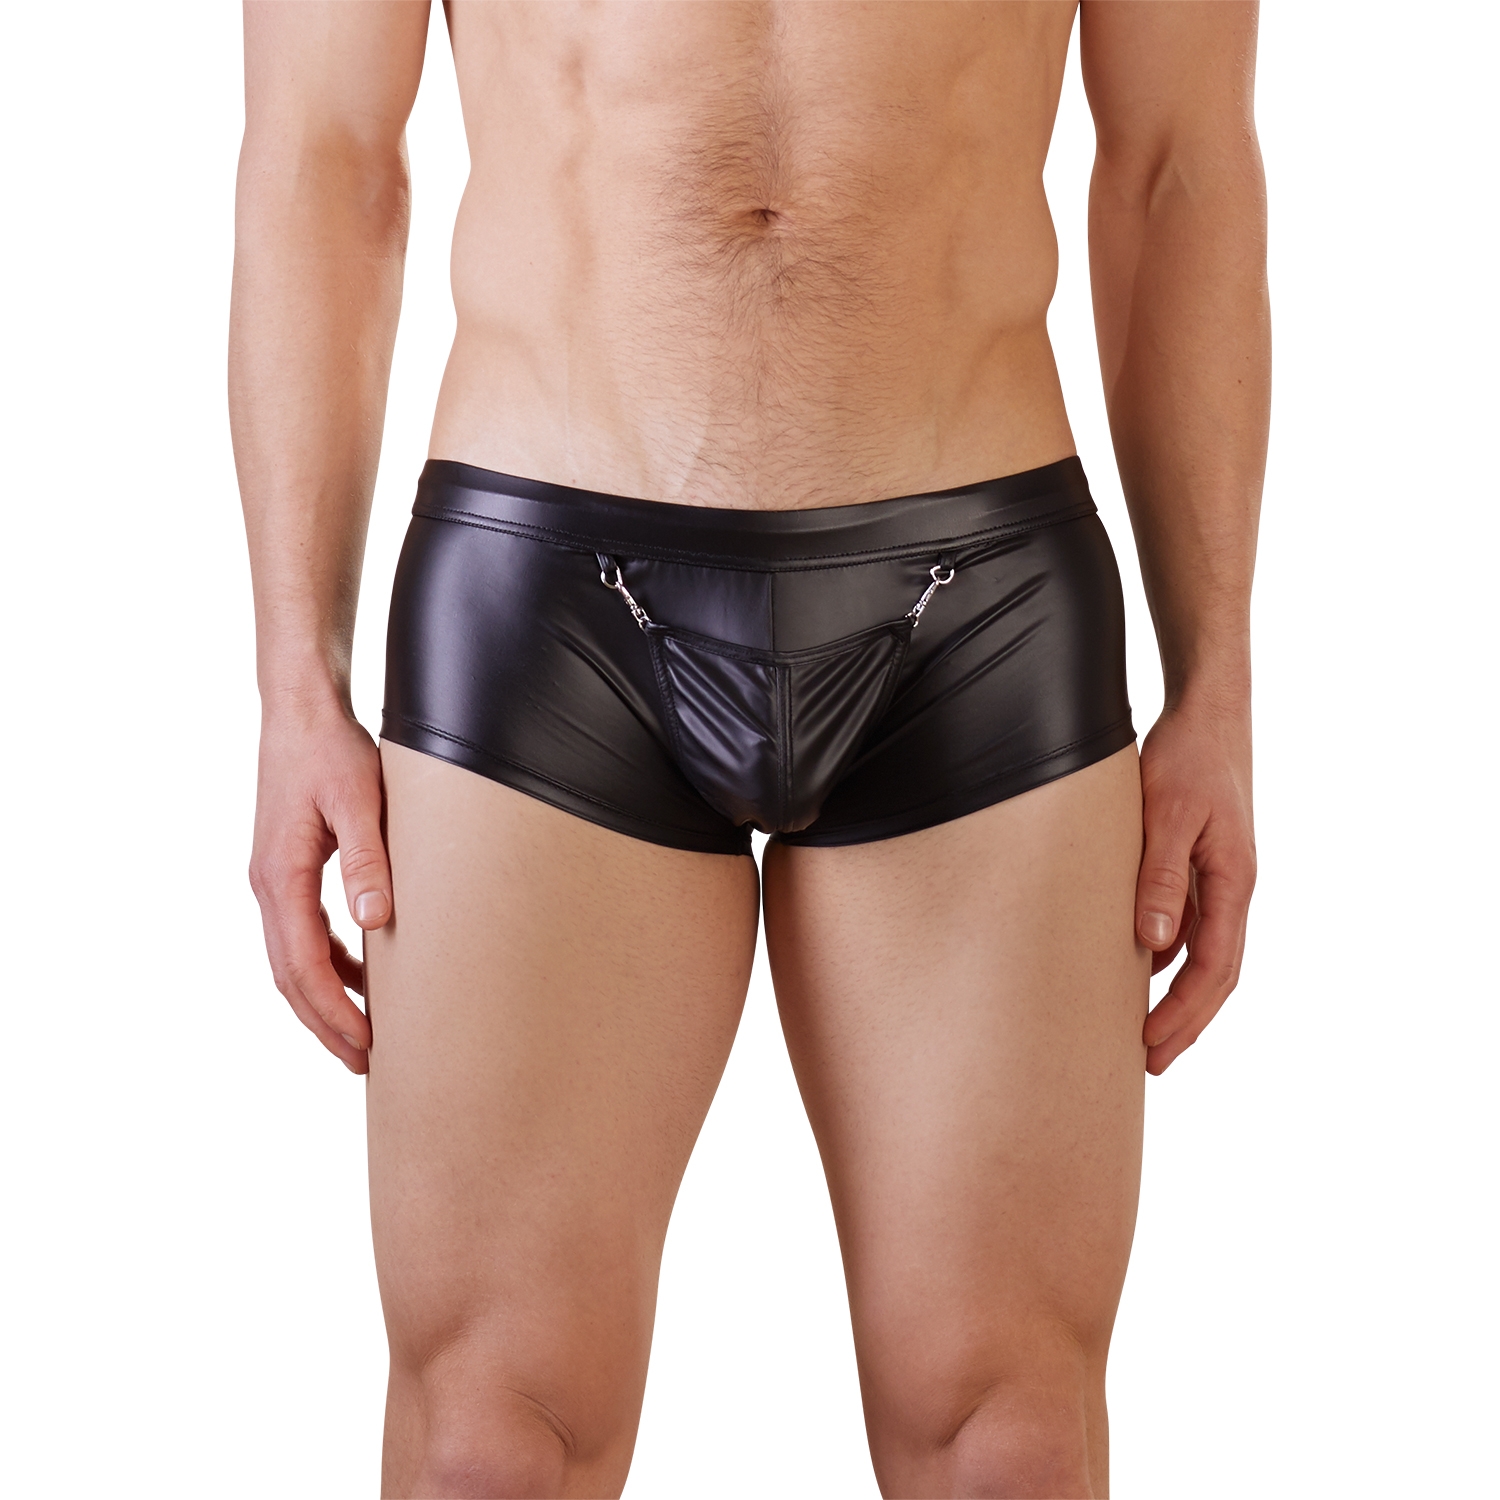 NEK Wetlook Boxer Shorts - Black - S